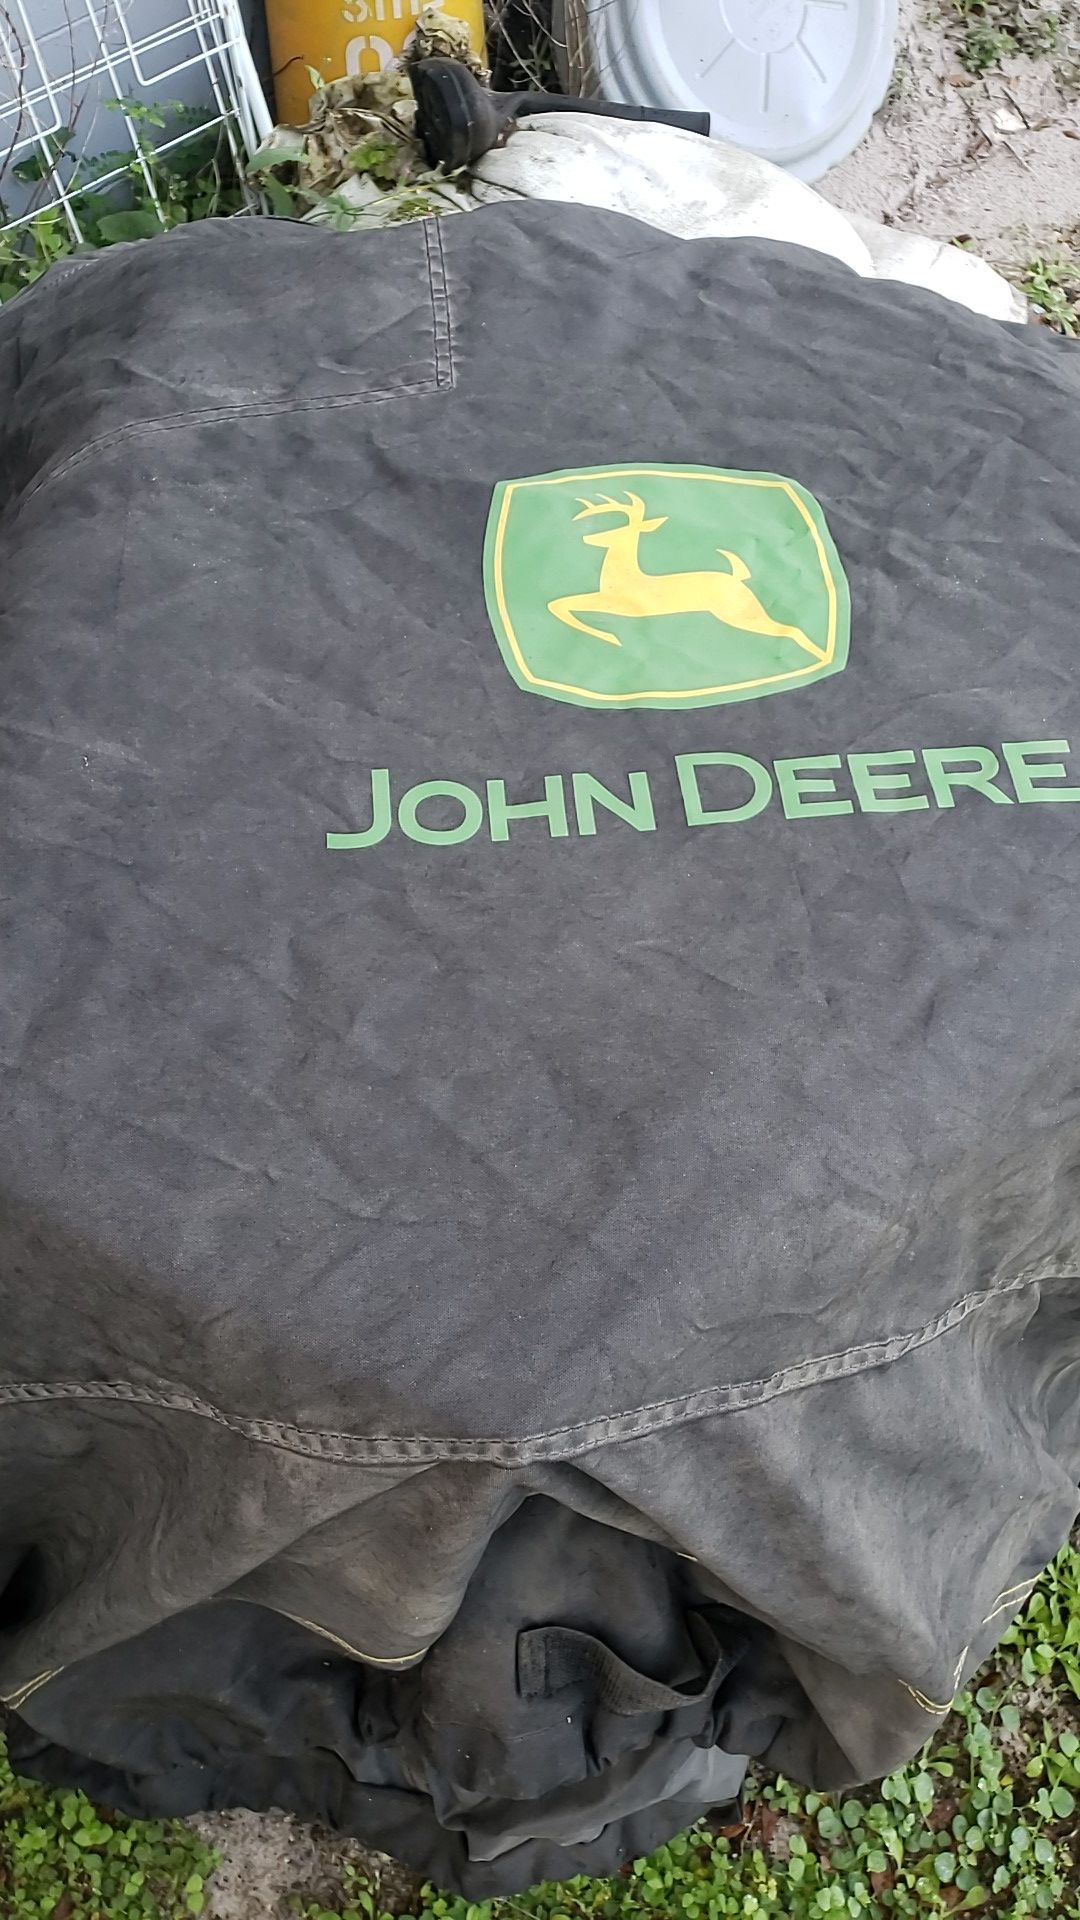 John Deere riding lawn mower cover.